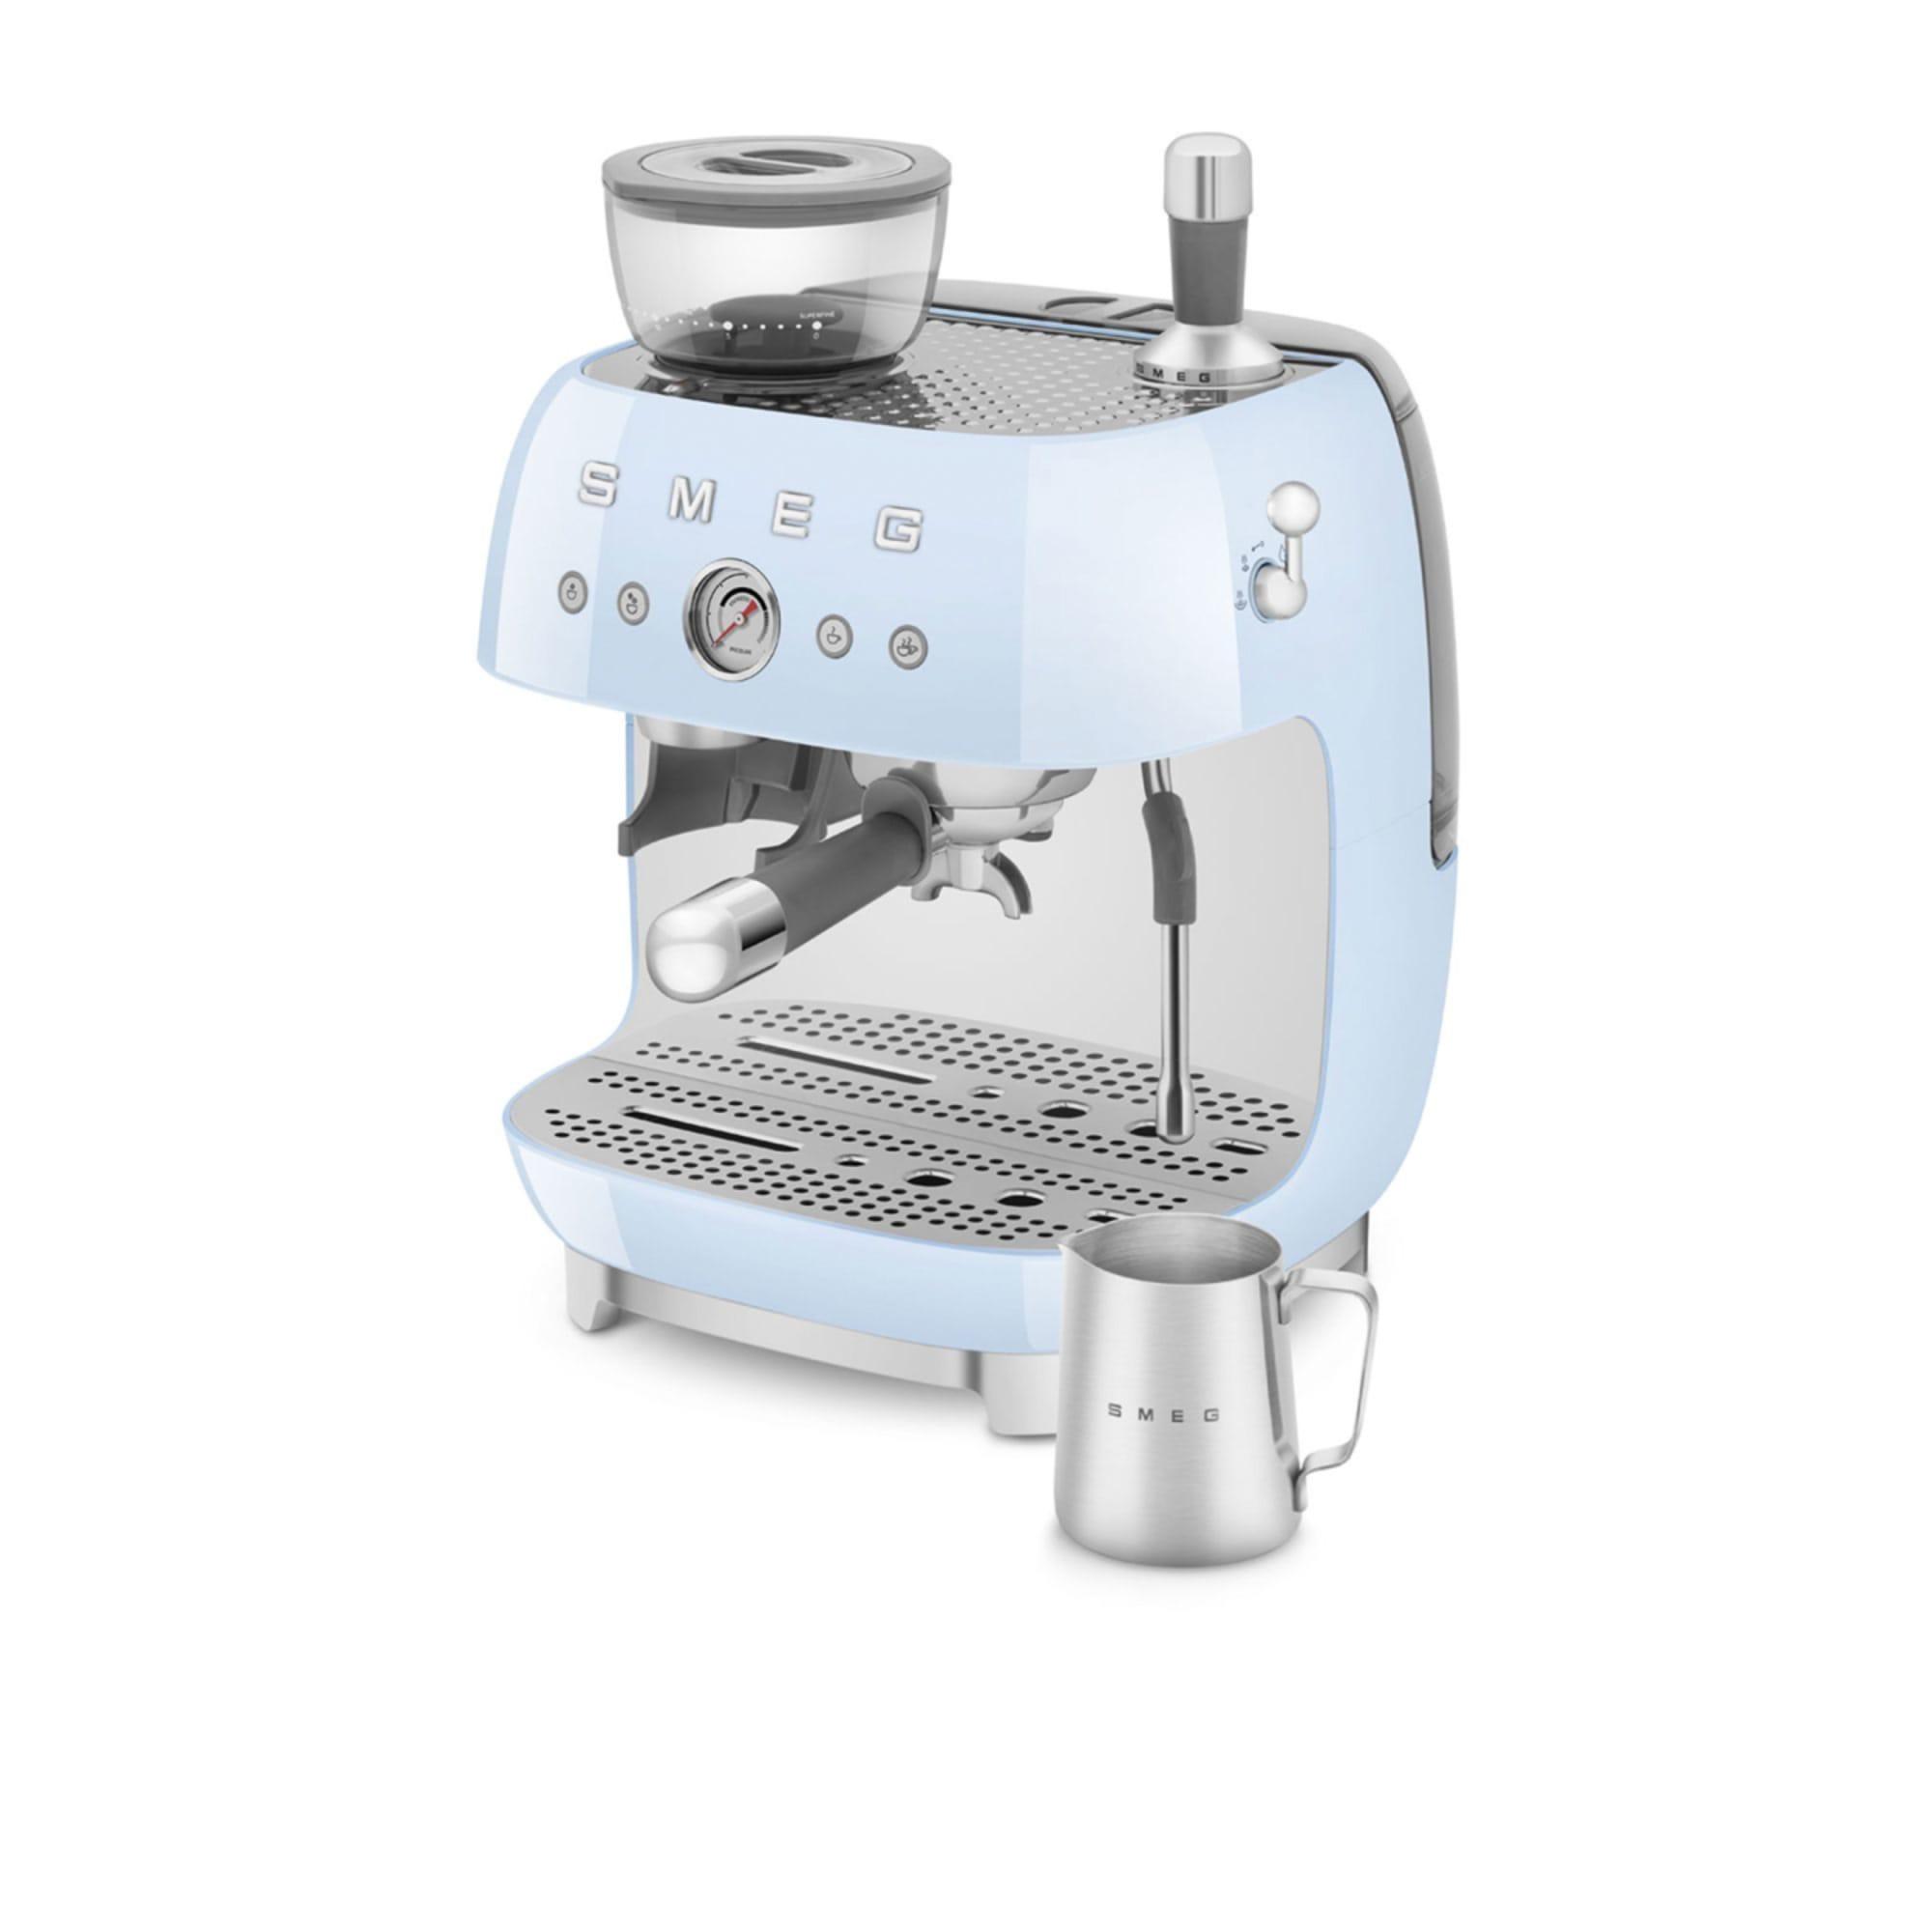 Smeg 50's Retro Style Espresso Machine with Built In Grinder Pastel Blue Image 14